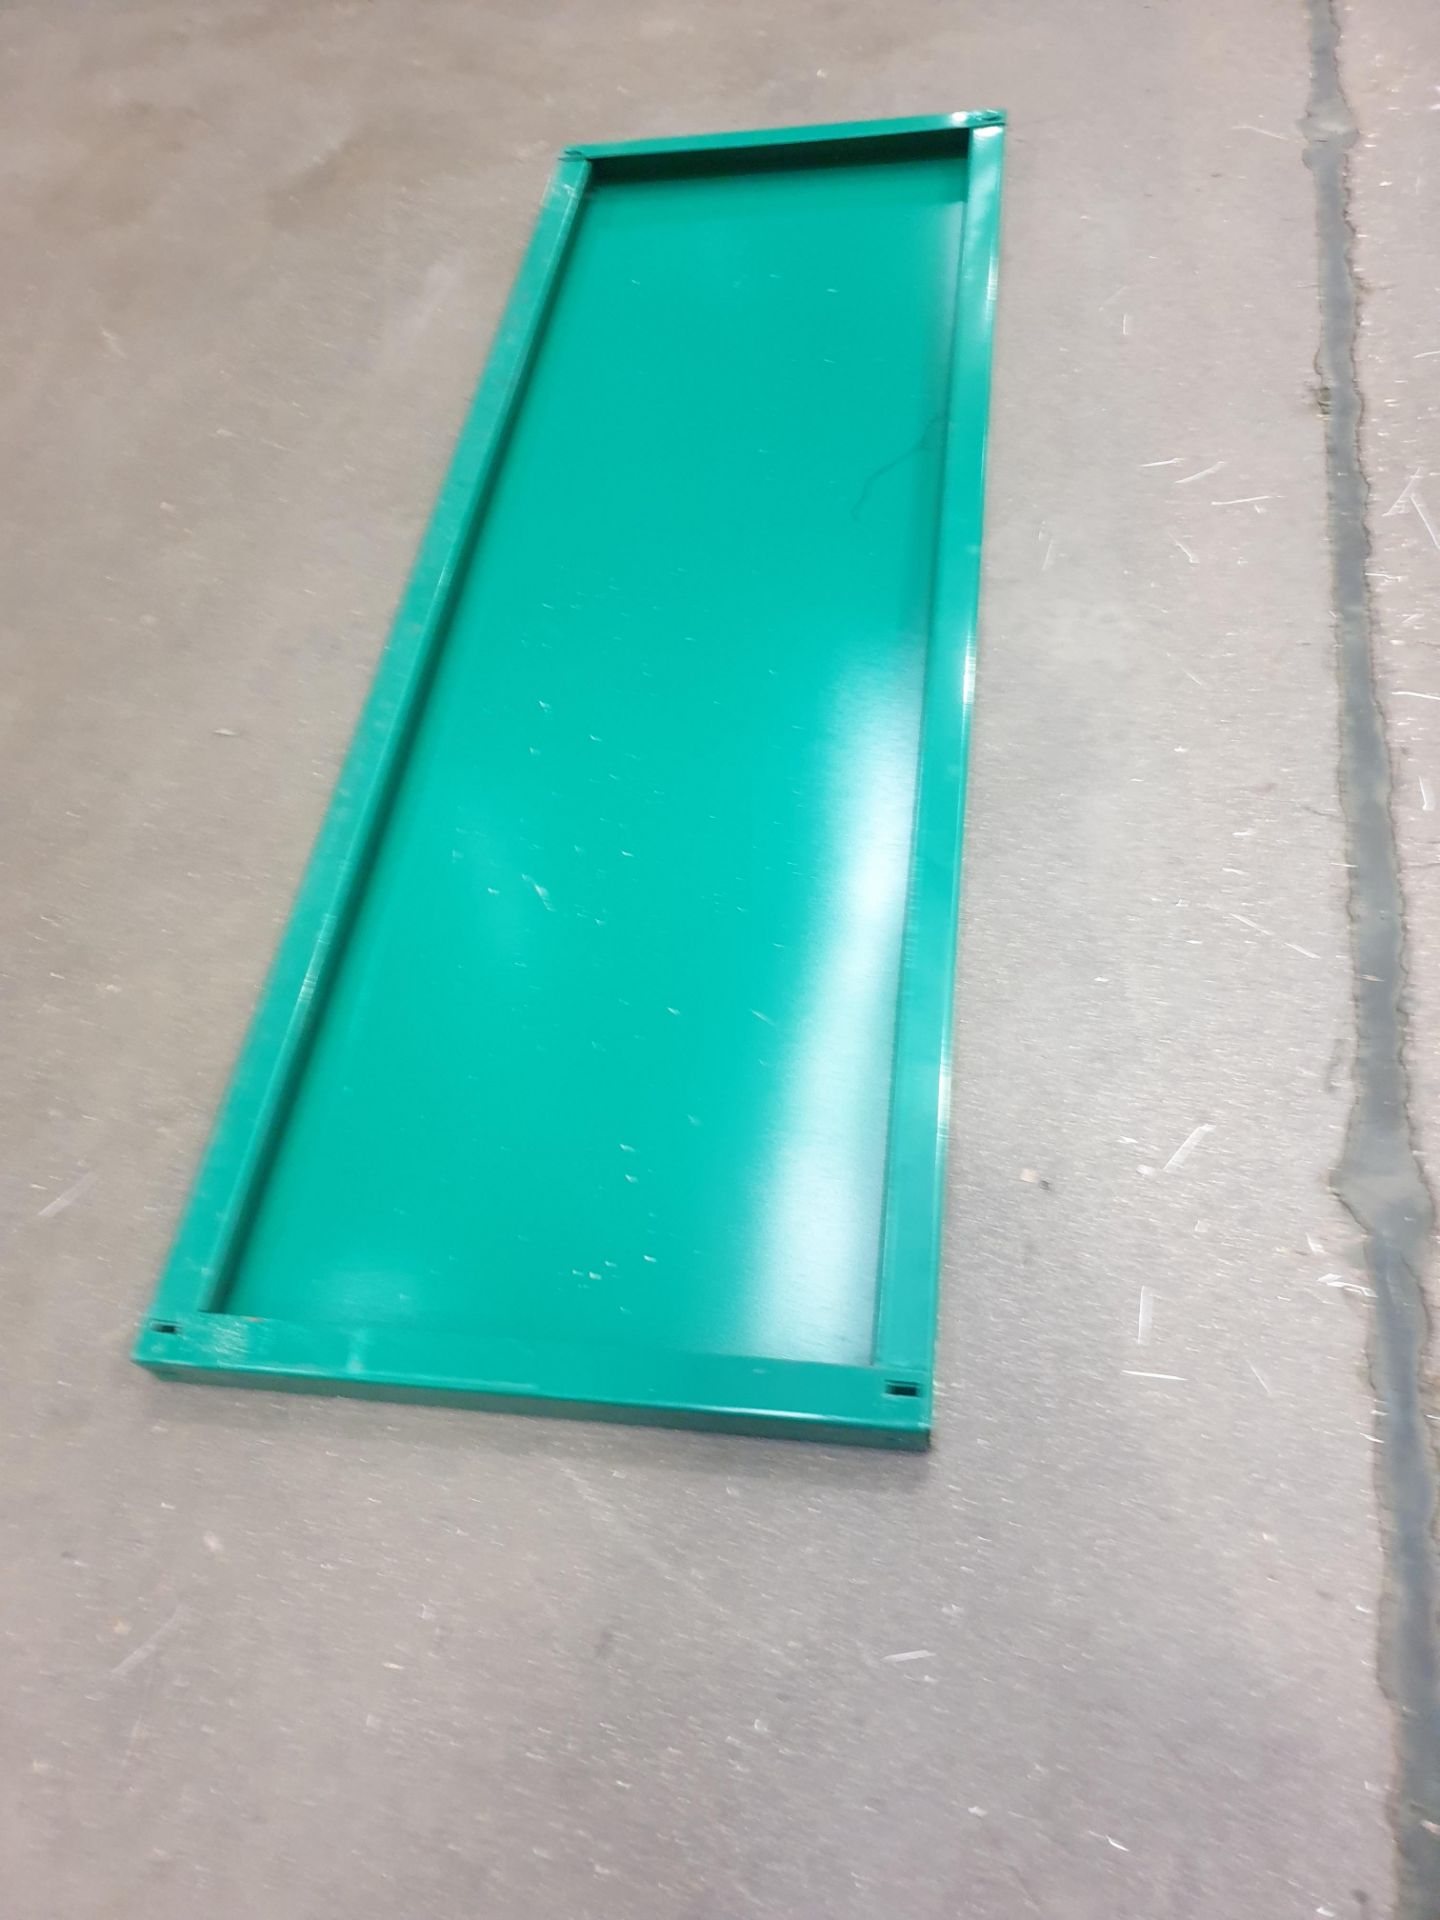 Pallet of Green Metal Shelves - Image 3 of 3